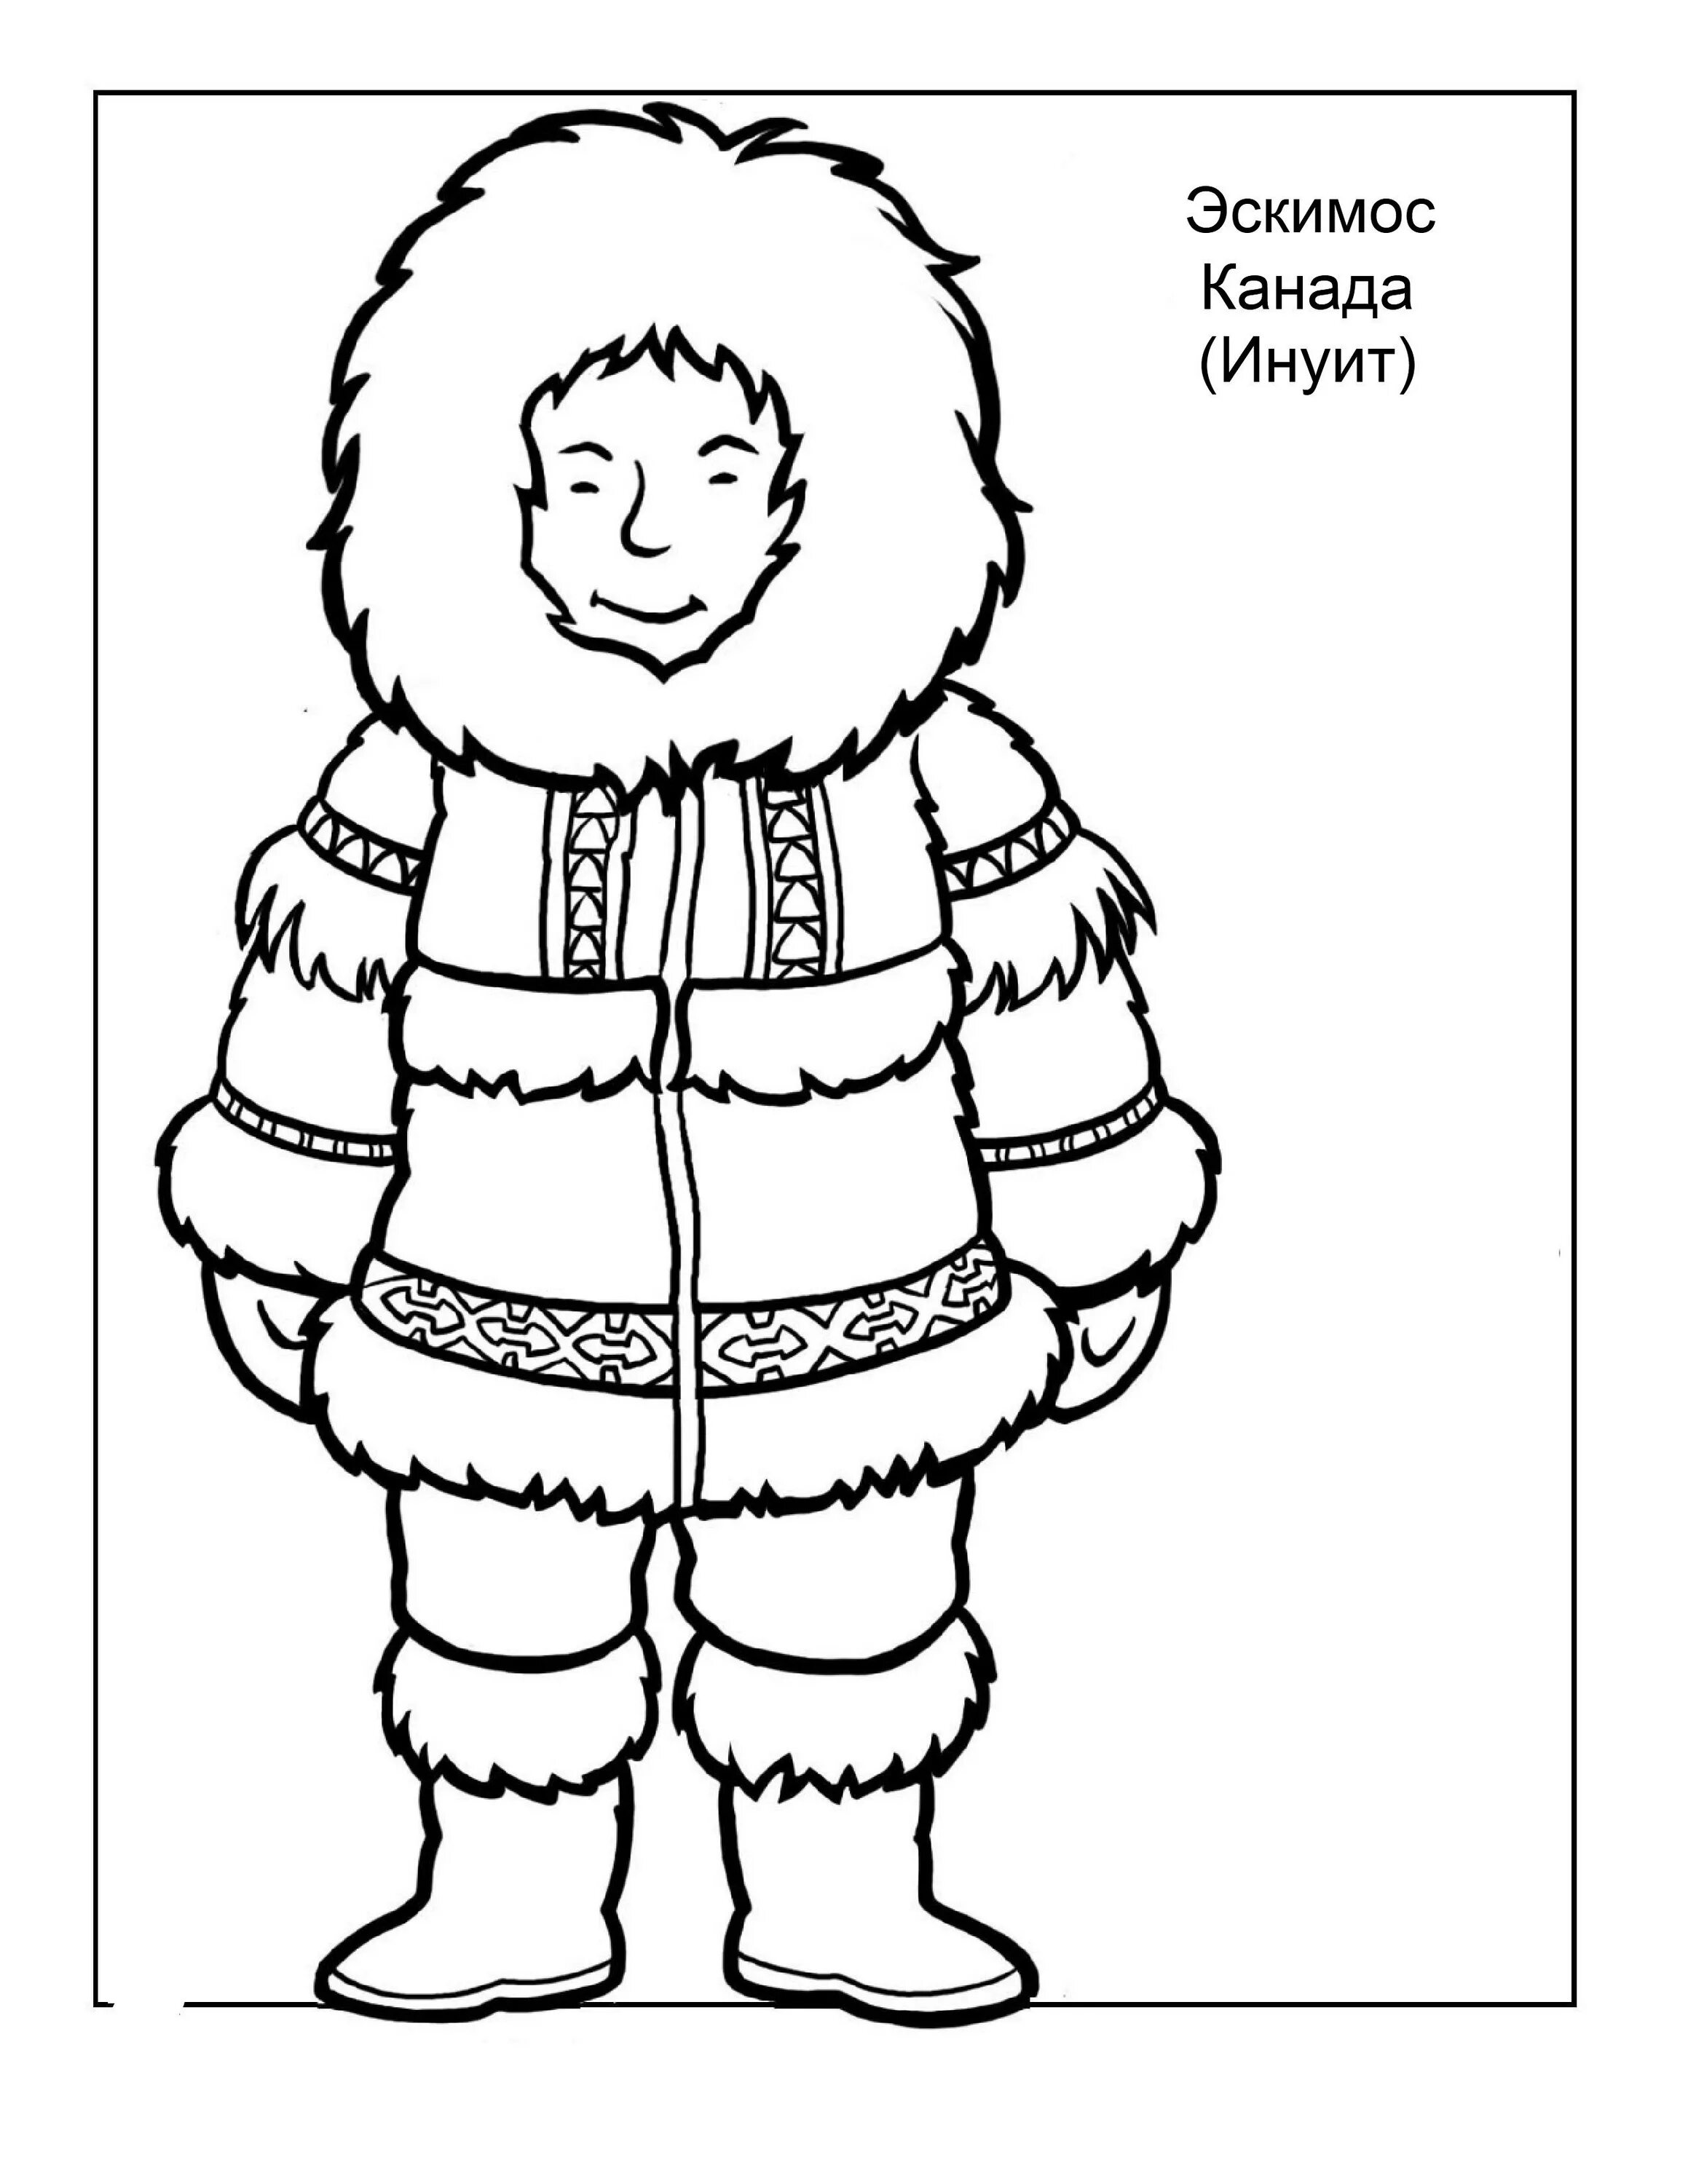 Eskimo for kids #26